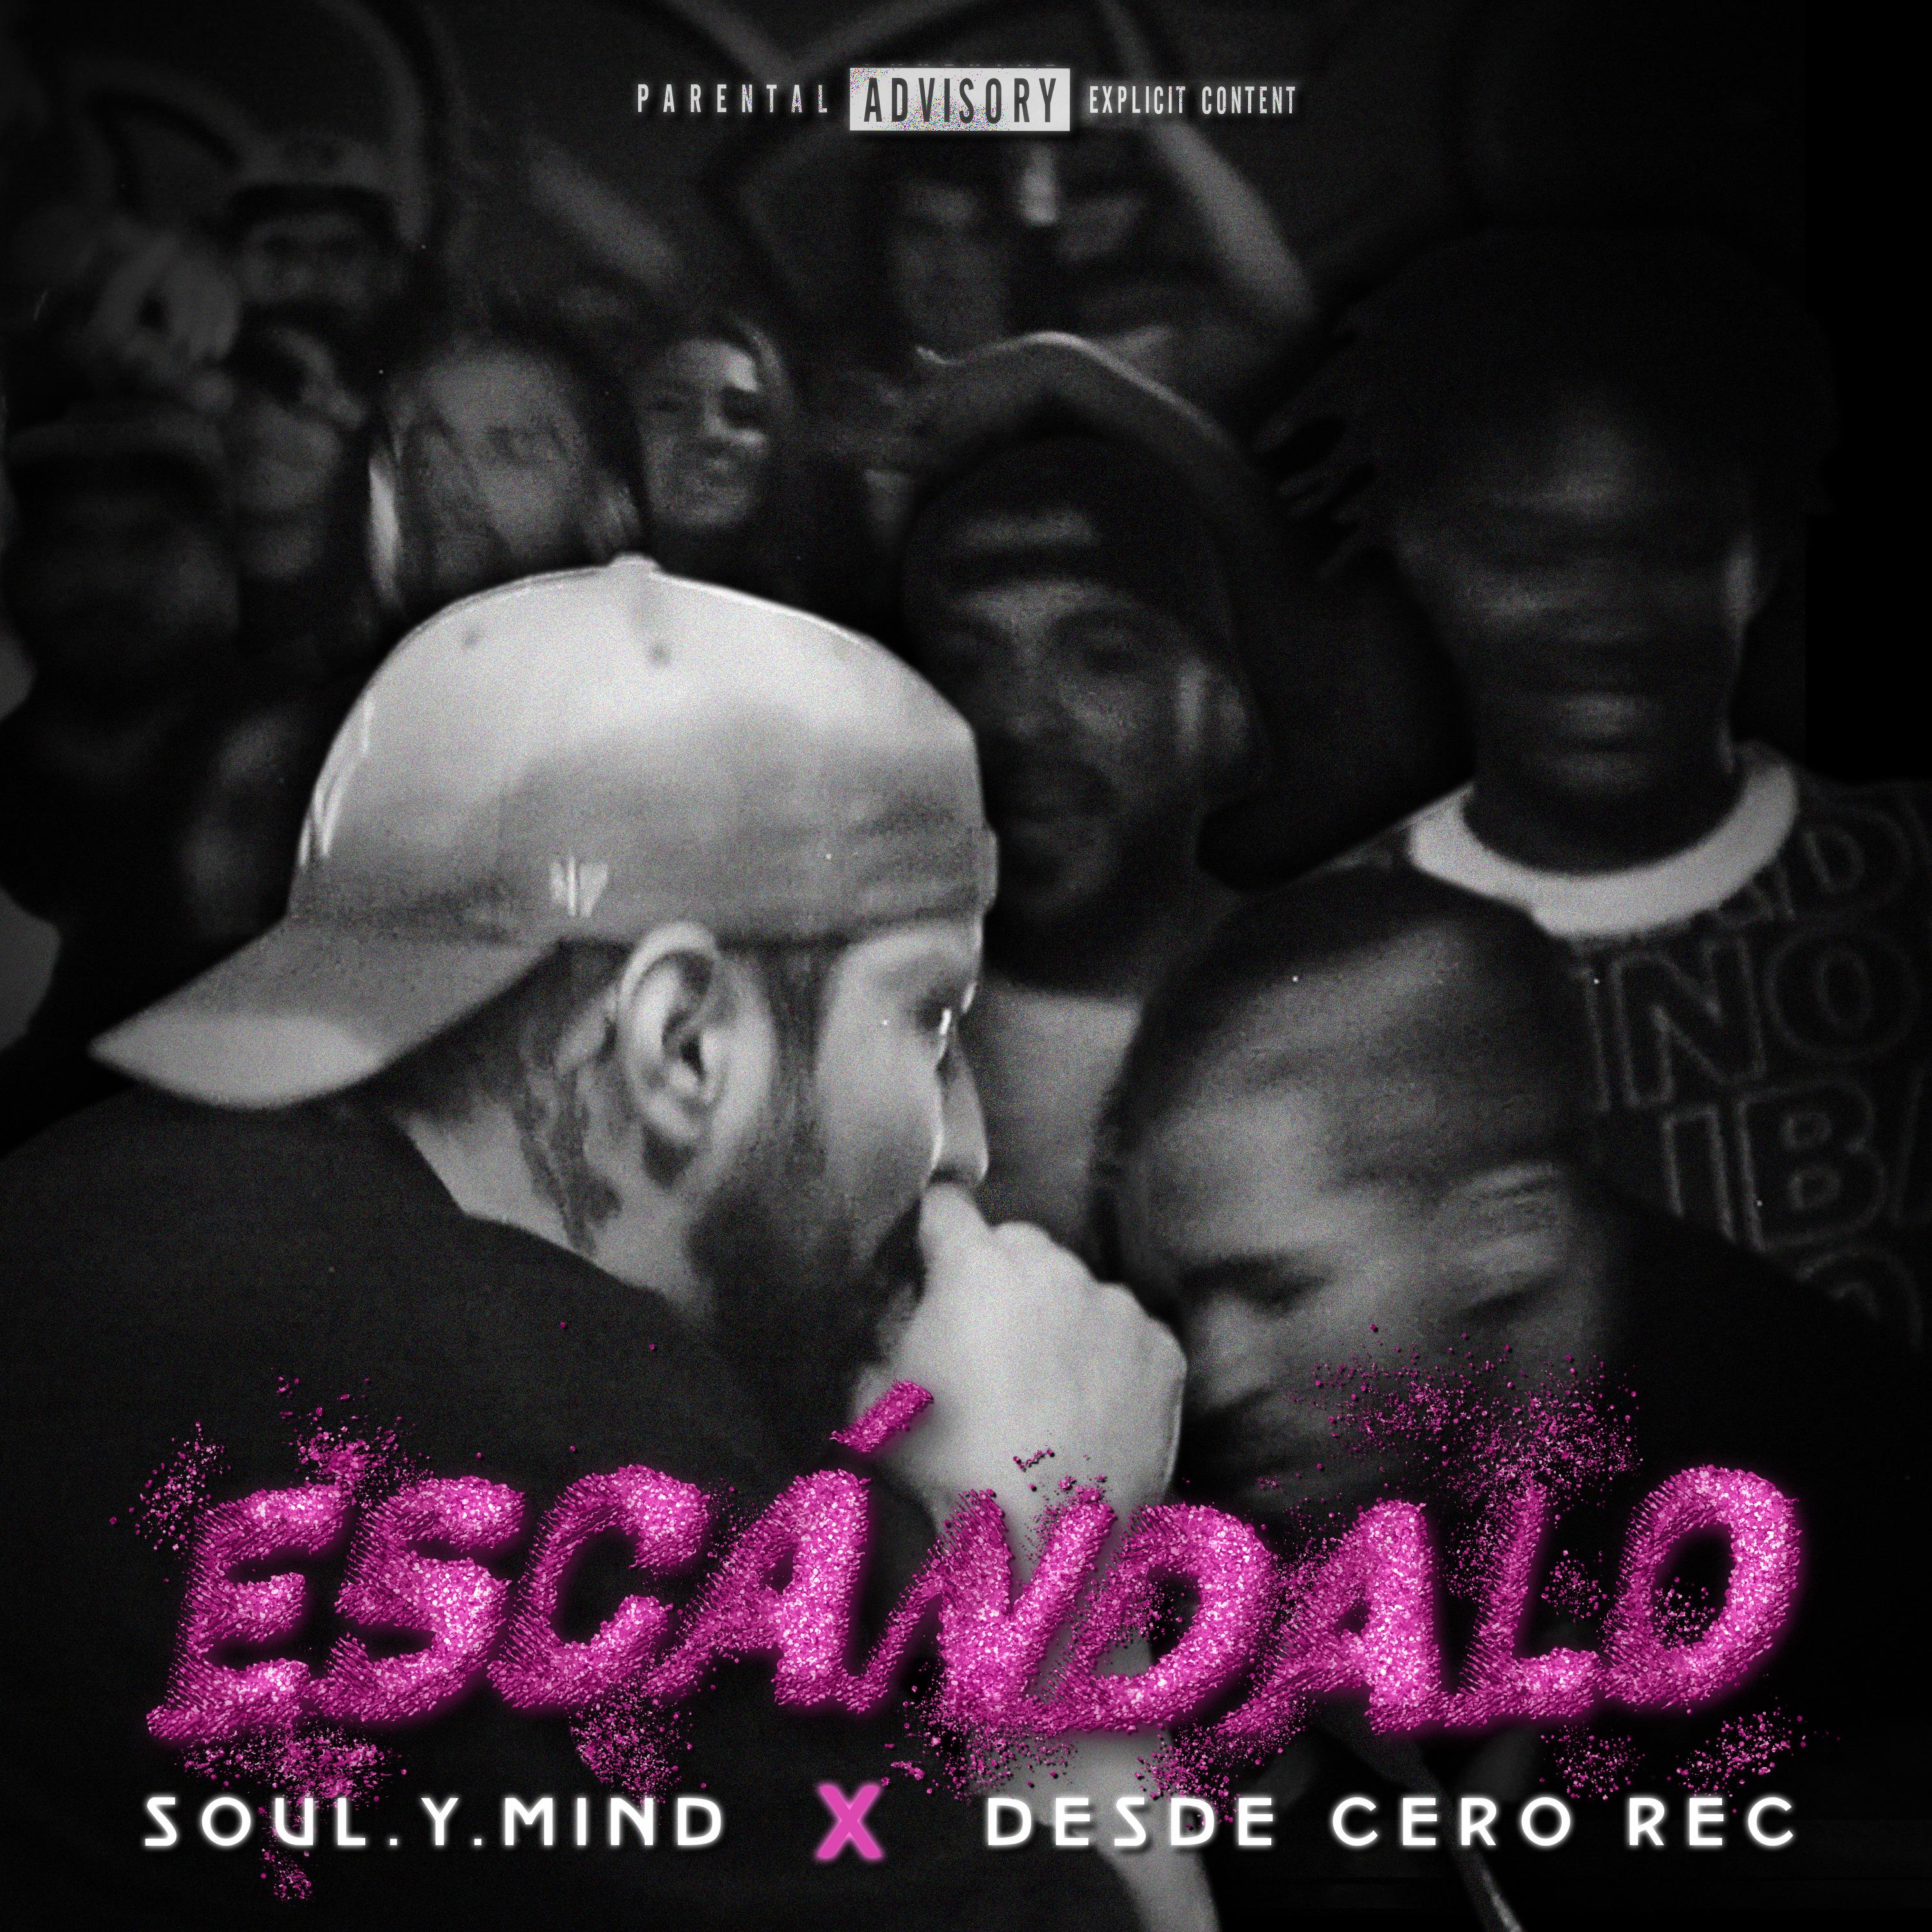 Постер альбома Escándalo